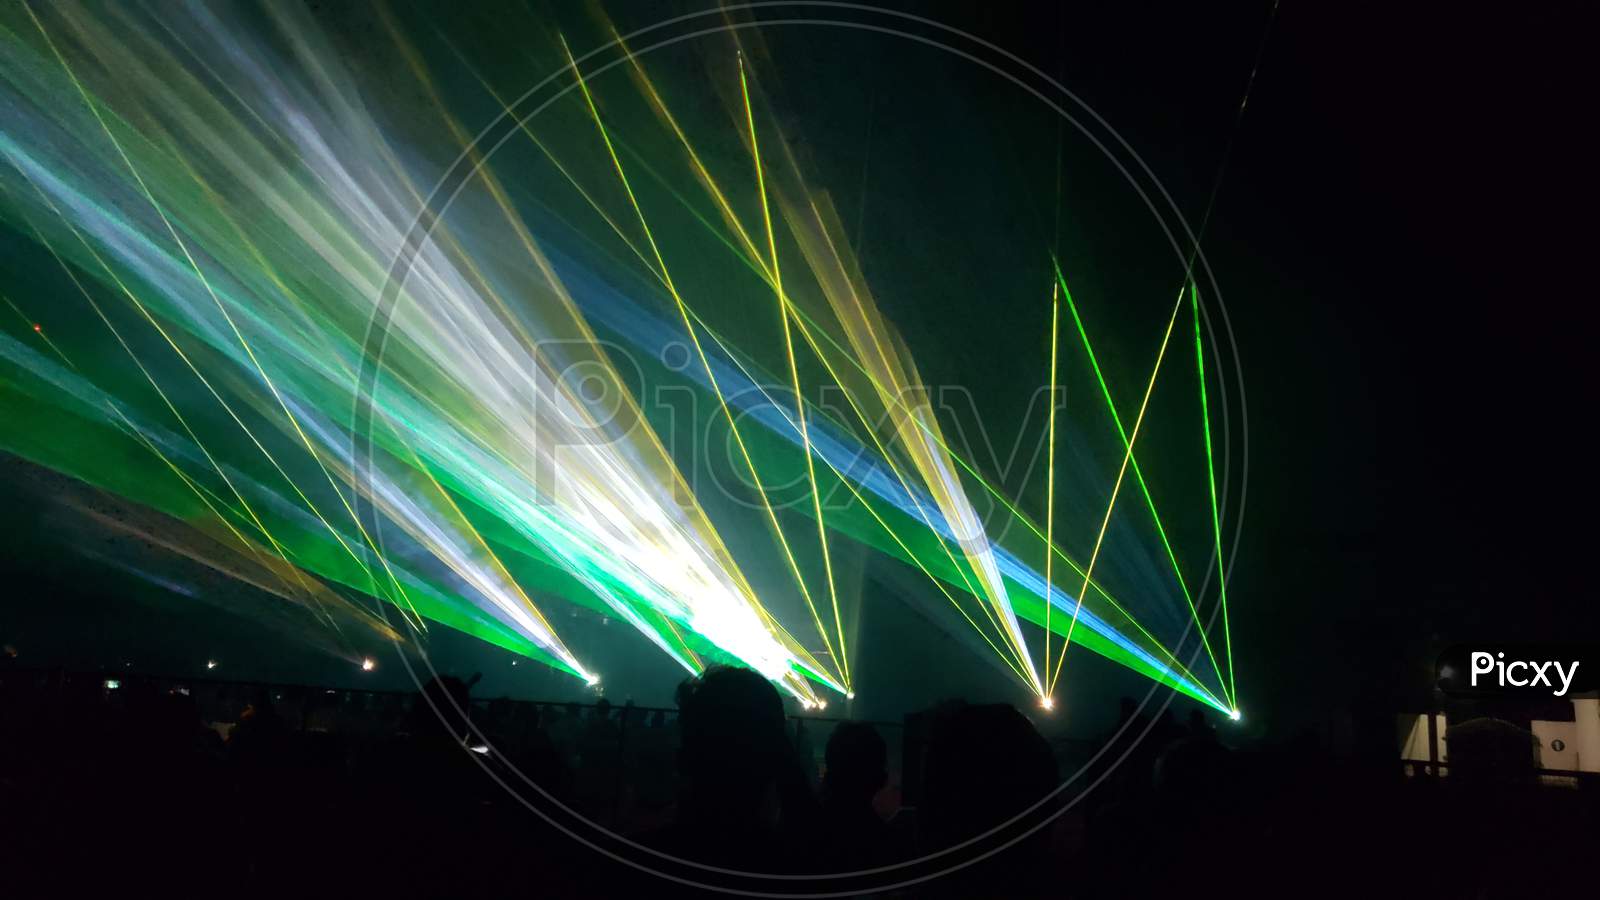 Laser show